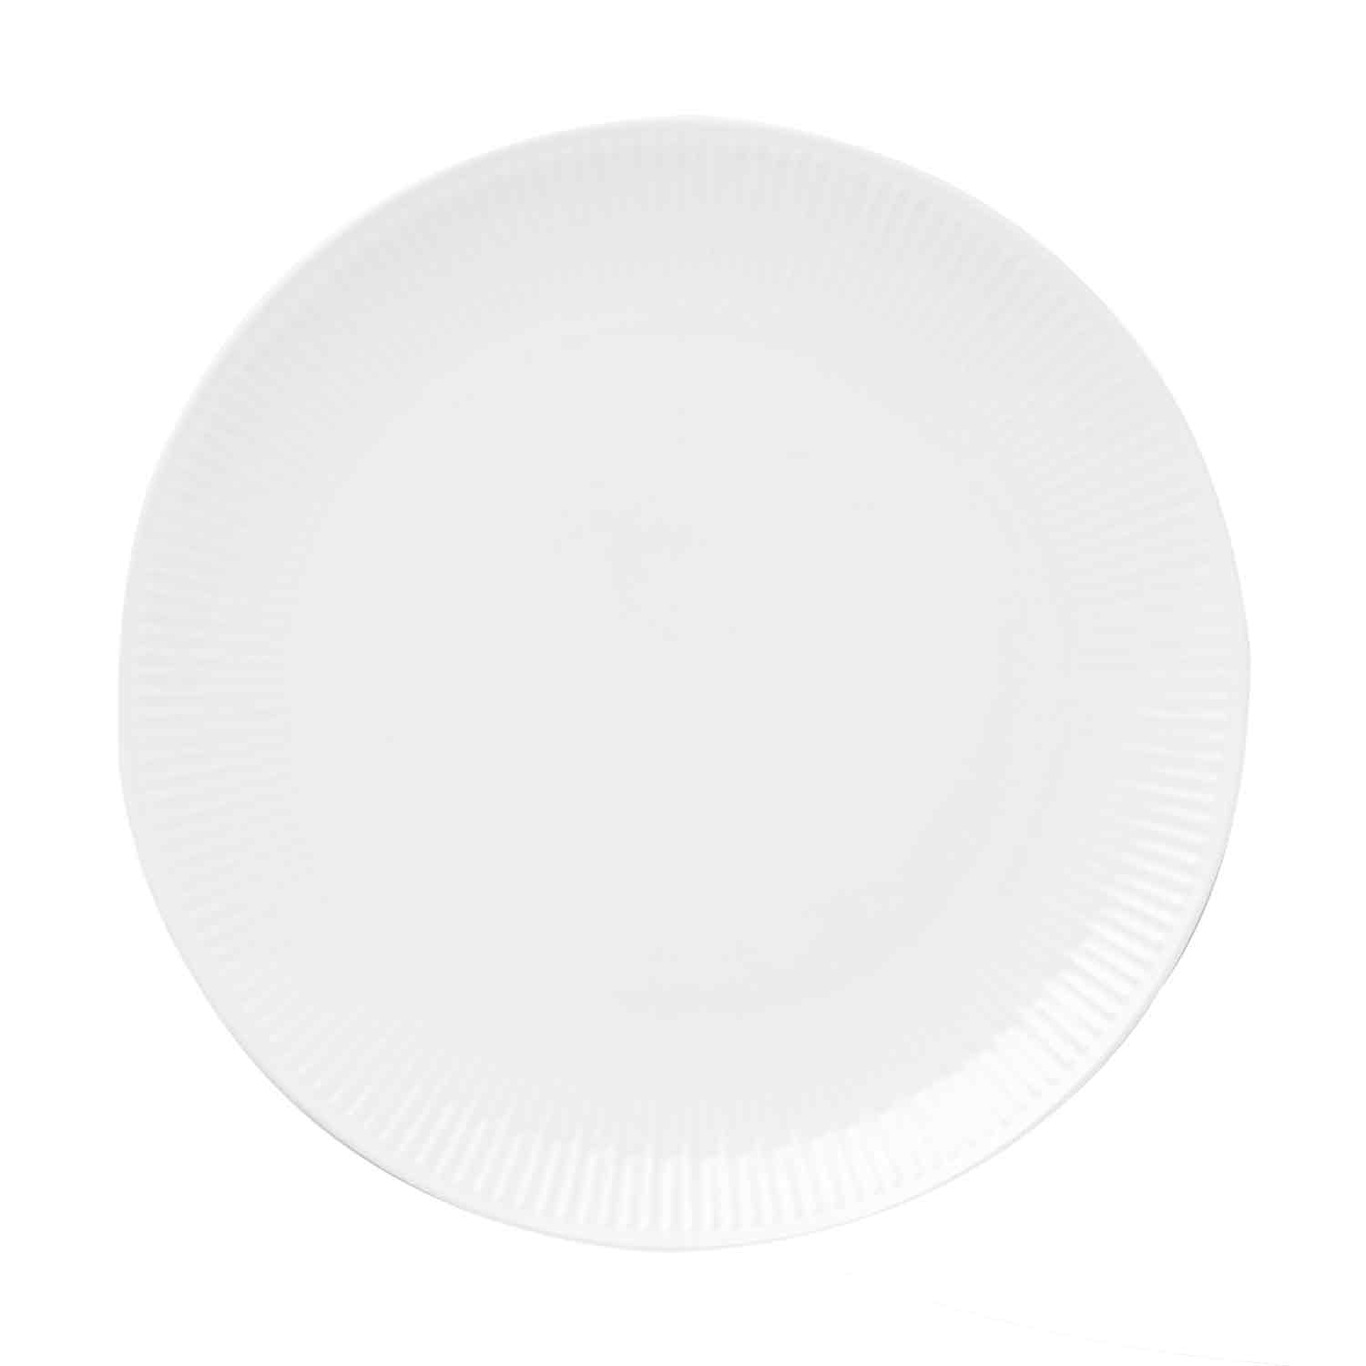 Relief Dessert Plate 20 cm 4-Pcs, White